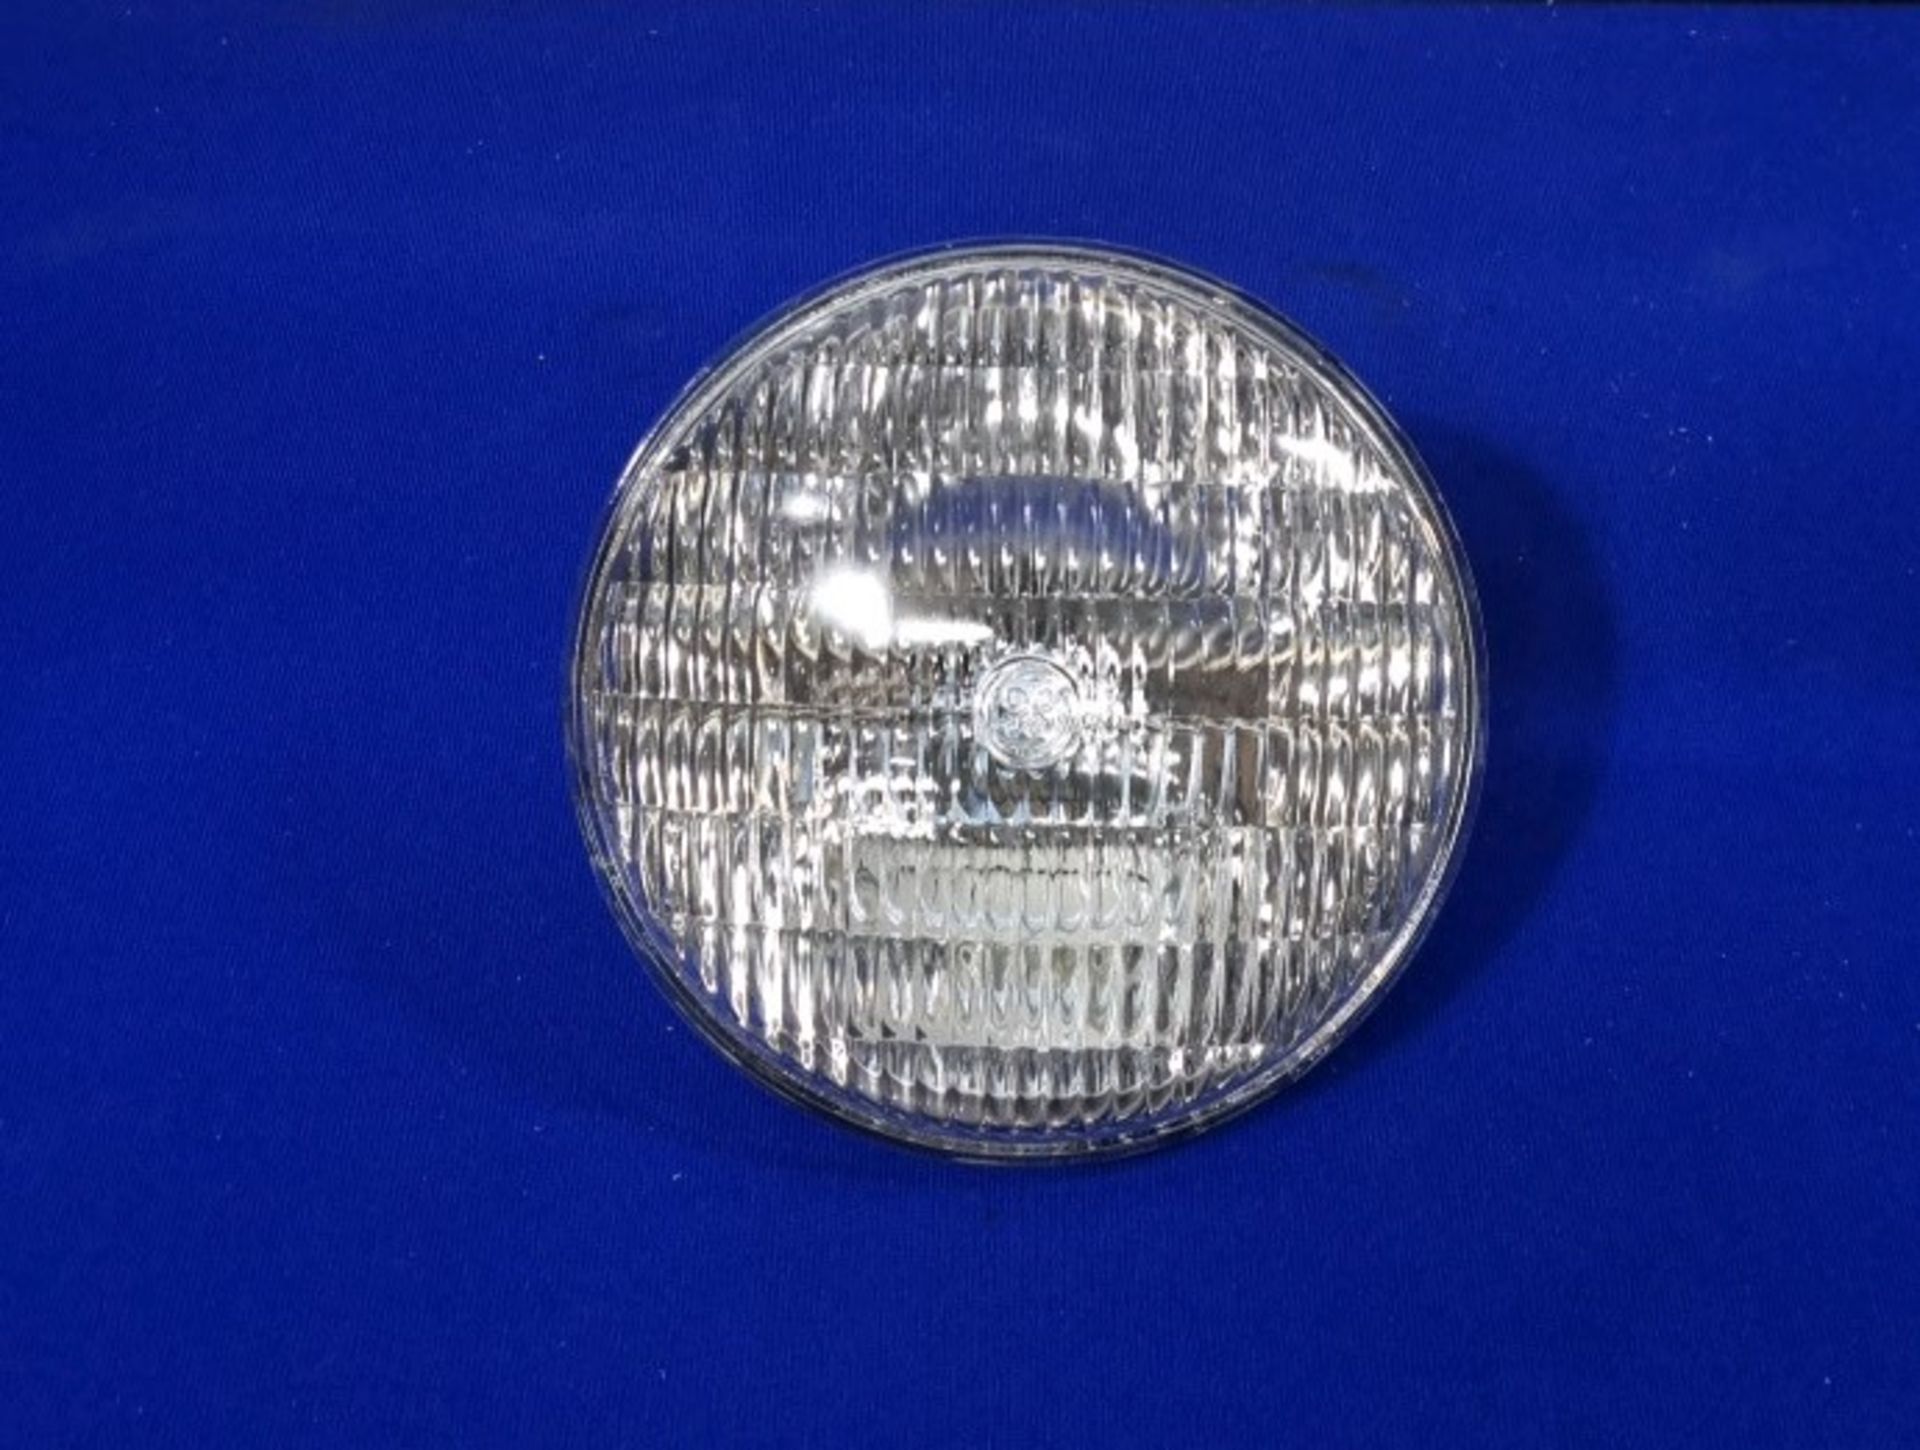 General Electrical 300PAR56/MFL Spot Lamp Bulbs 240-250 V 300 W - Image 2 of 4